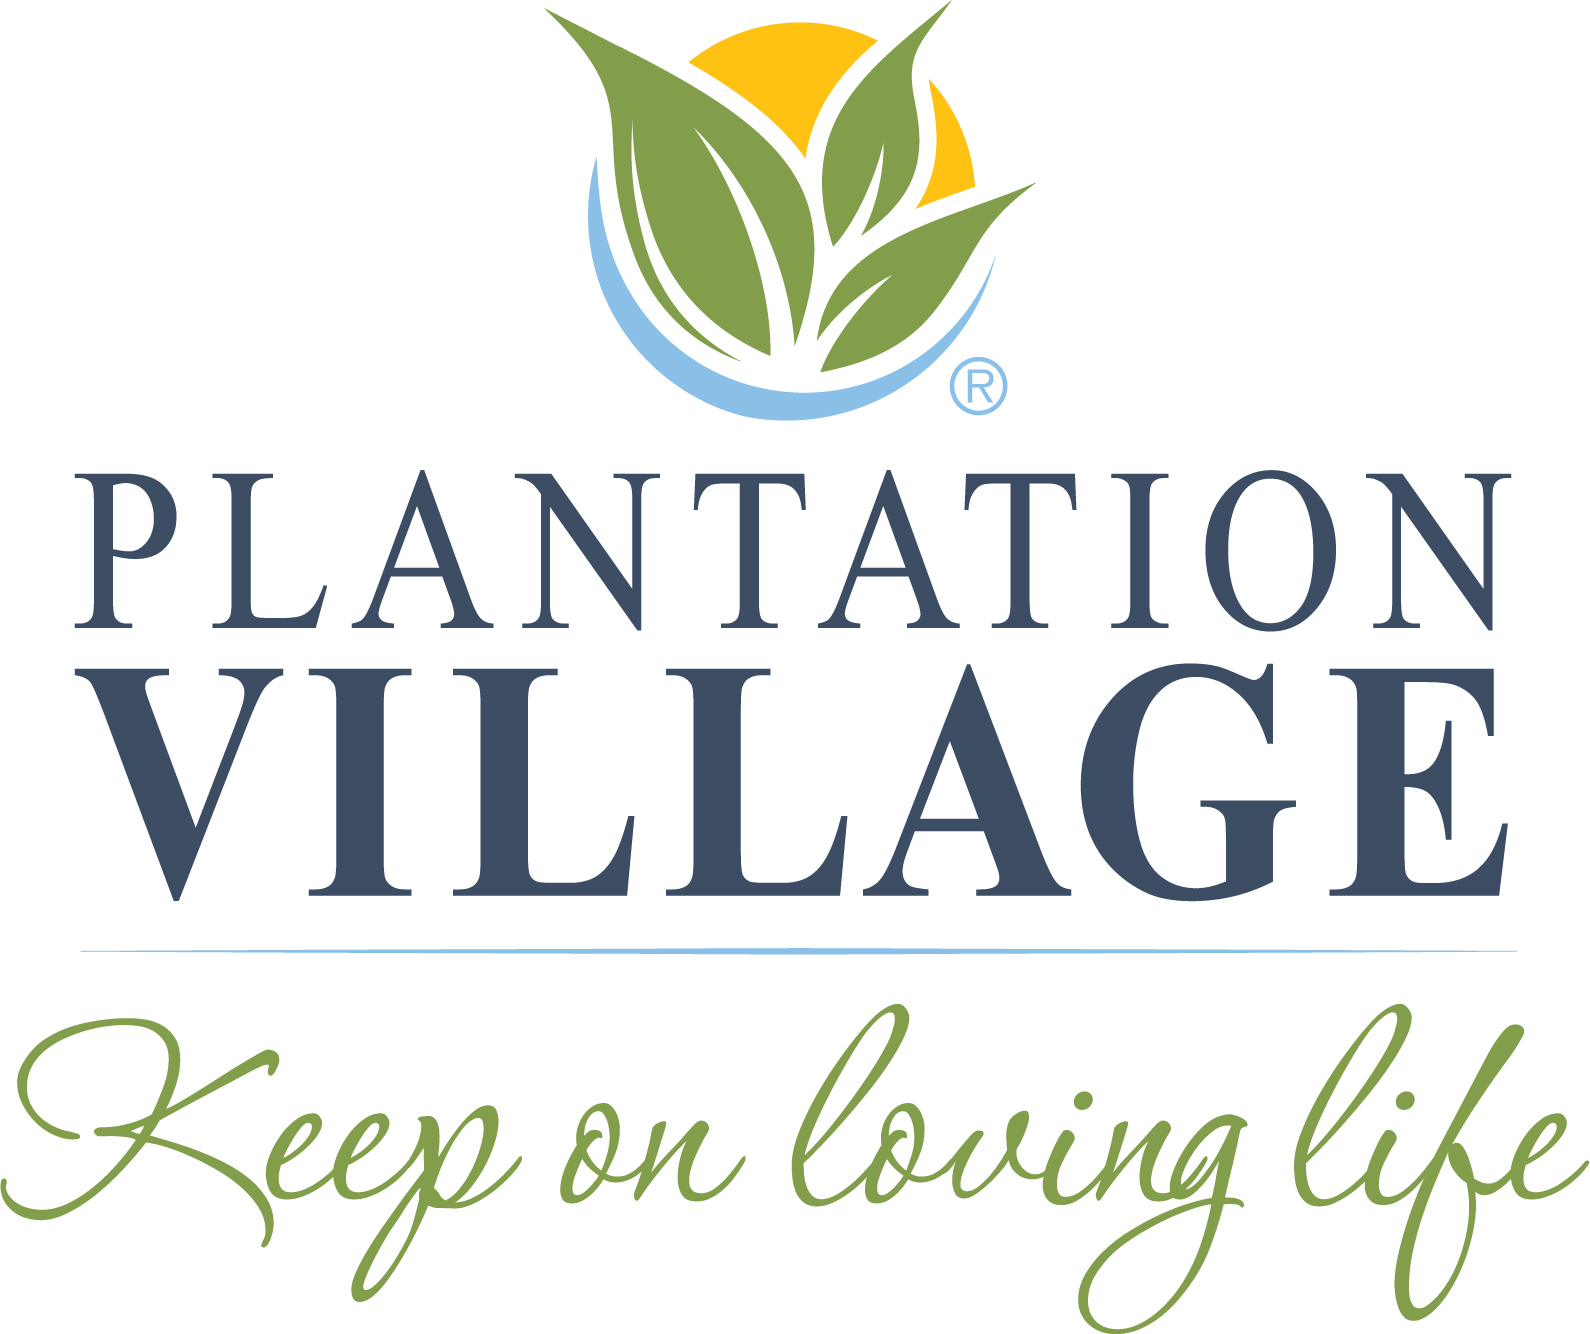 Plantation Village Logo